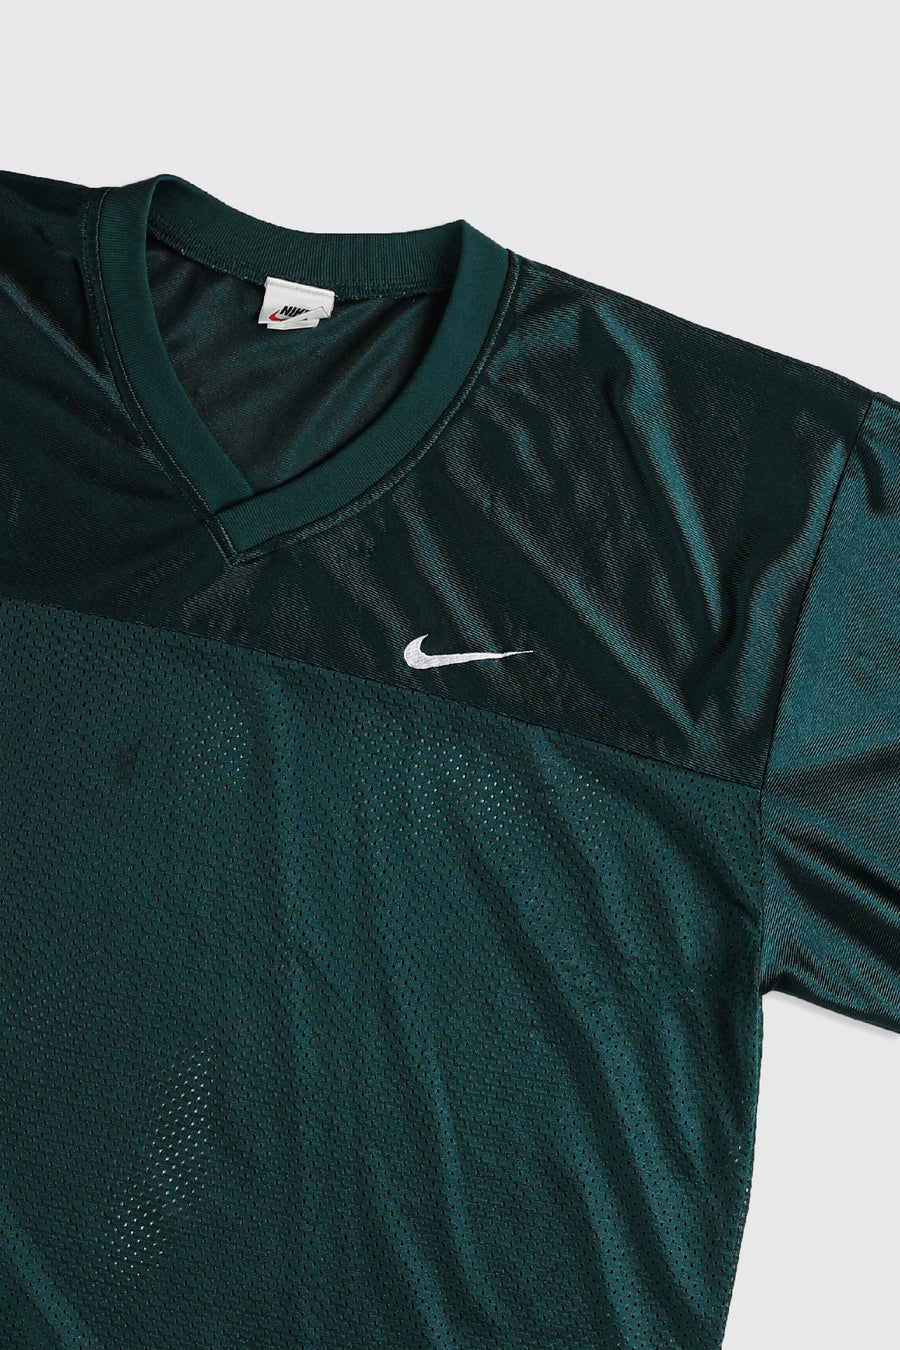 Vintage Nike Jersey - XL